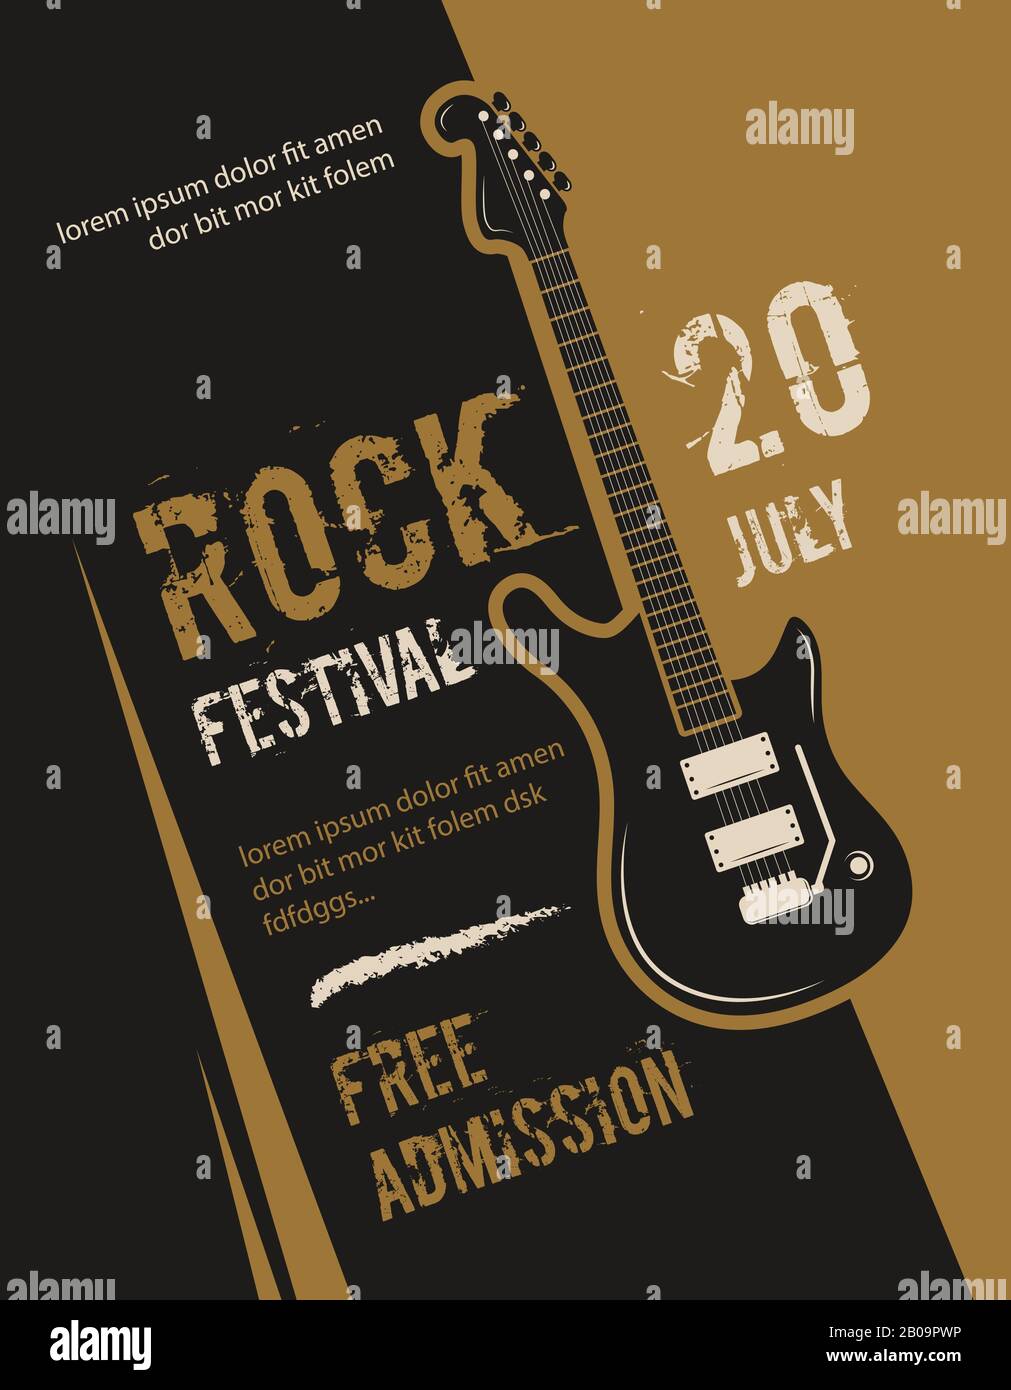 Retro Grunge Rock and Roll, Heavy Metal, Musik Festival Vector Poster Design. Banner Rockfestival, Illustration von Placard mit Rockgitarre Stock Vektor